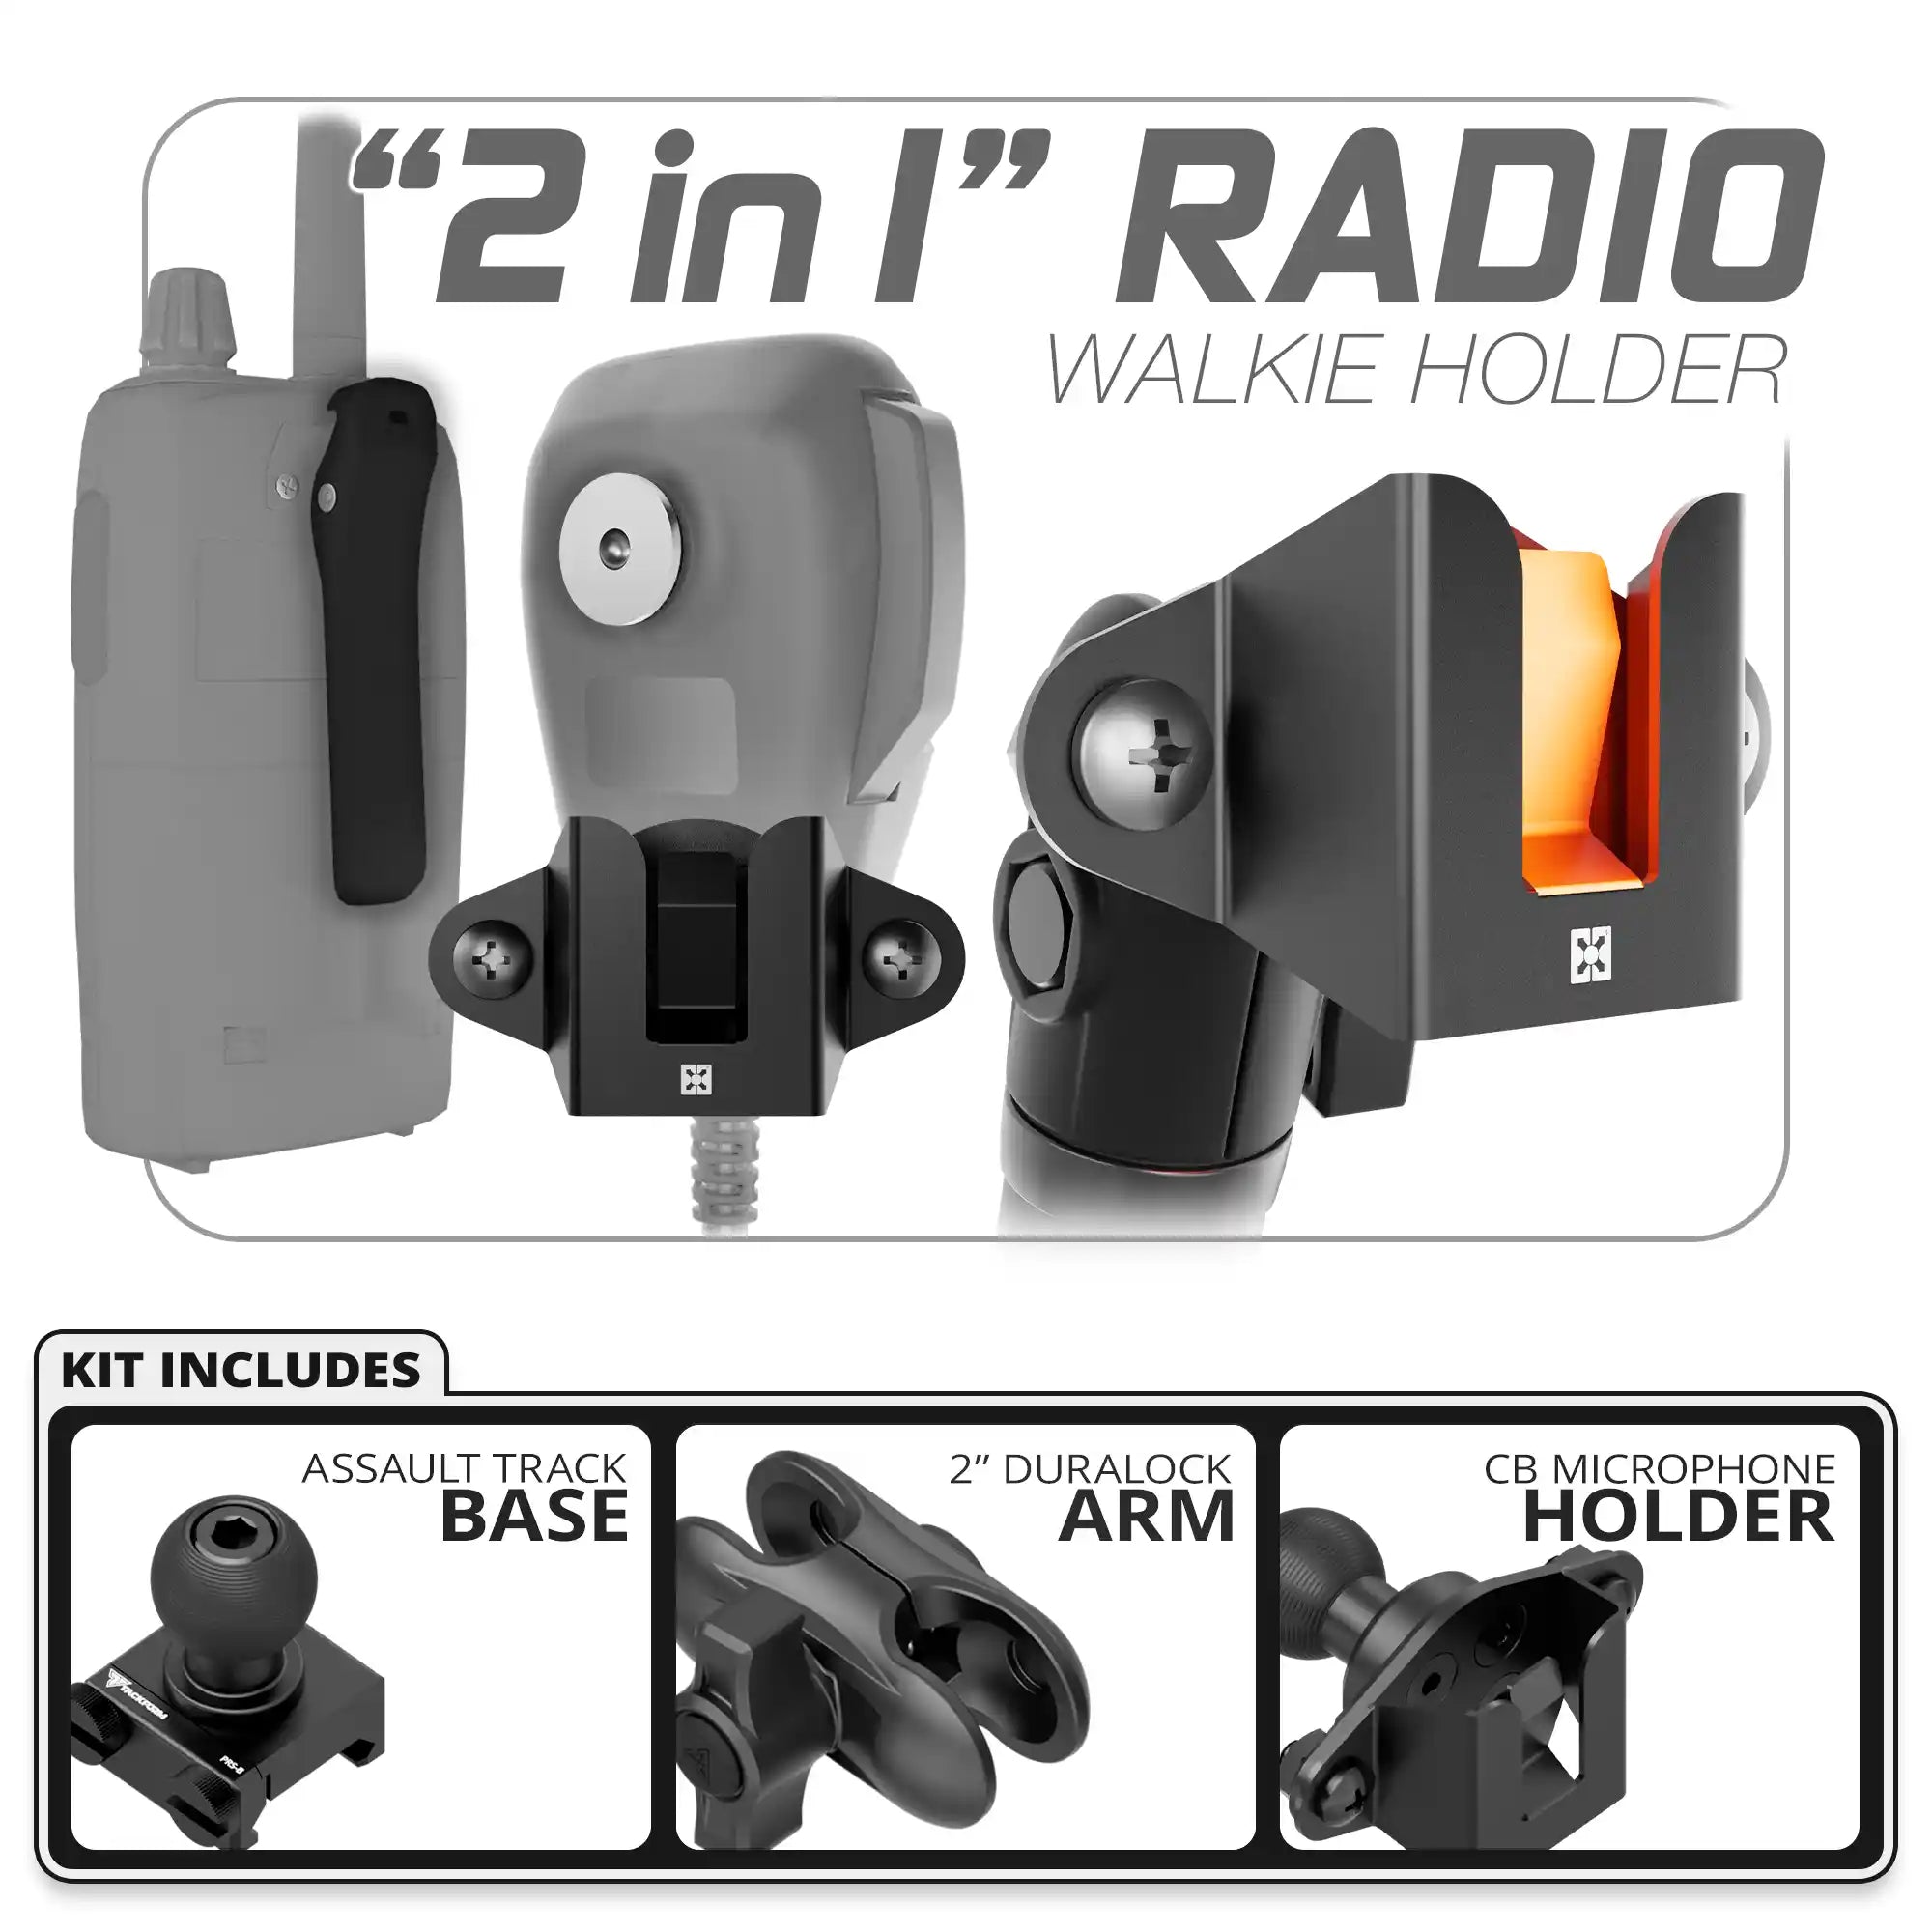 CB Radio/Microphone Holder | Assault Track Base | 2" DuraLock Arm